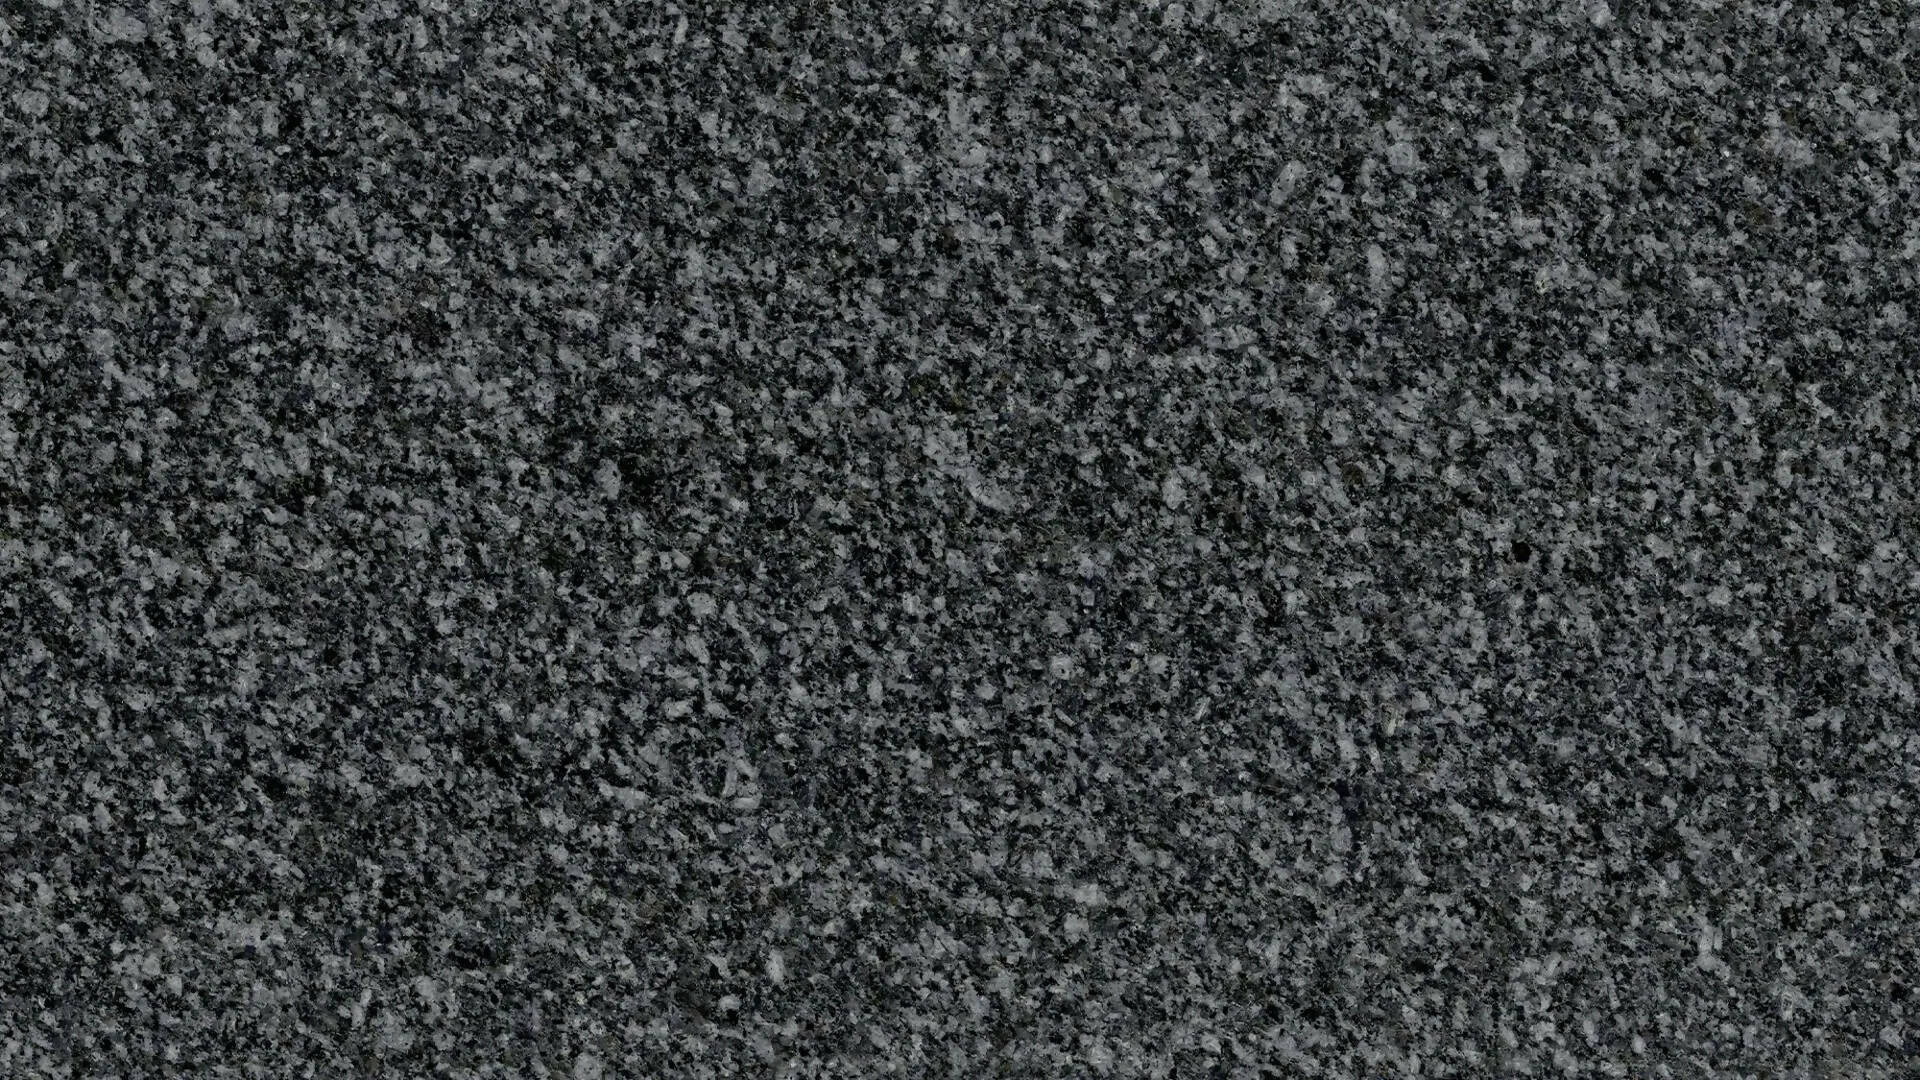 LANHELIN GRANITE,Granite,Brachot,www.work-tops.com